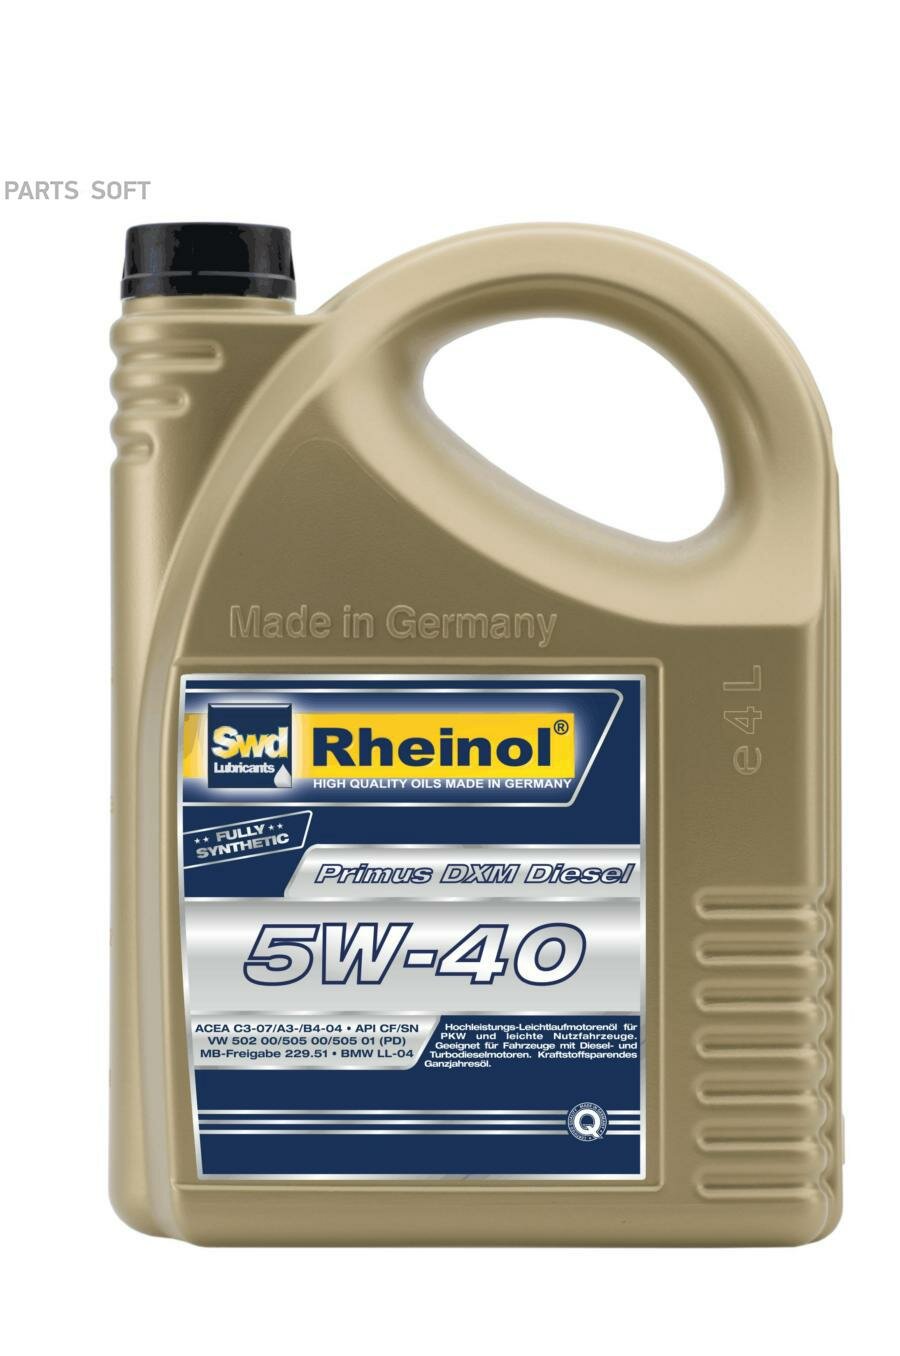 SWD RHEINOL 31239471 SWD Rheinol 5W-40 Primus DXM Diesel син. (4 л), шт 1шт